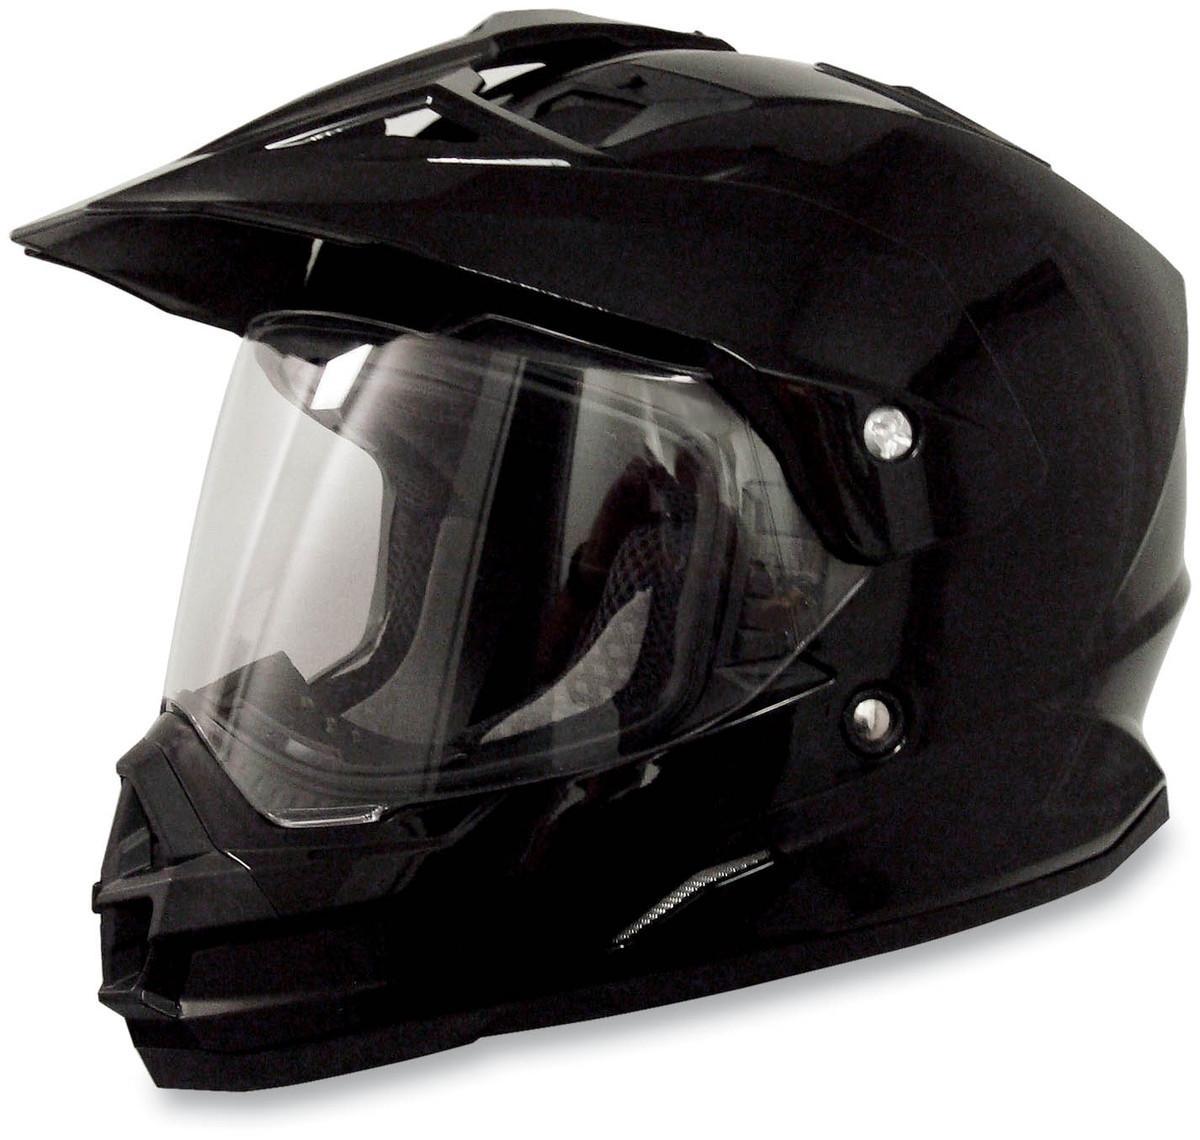 Afx fx-39 dual sport helmet solid black 